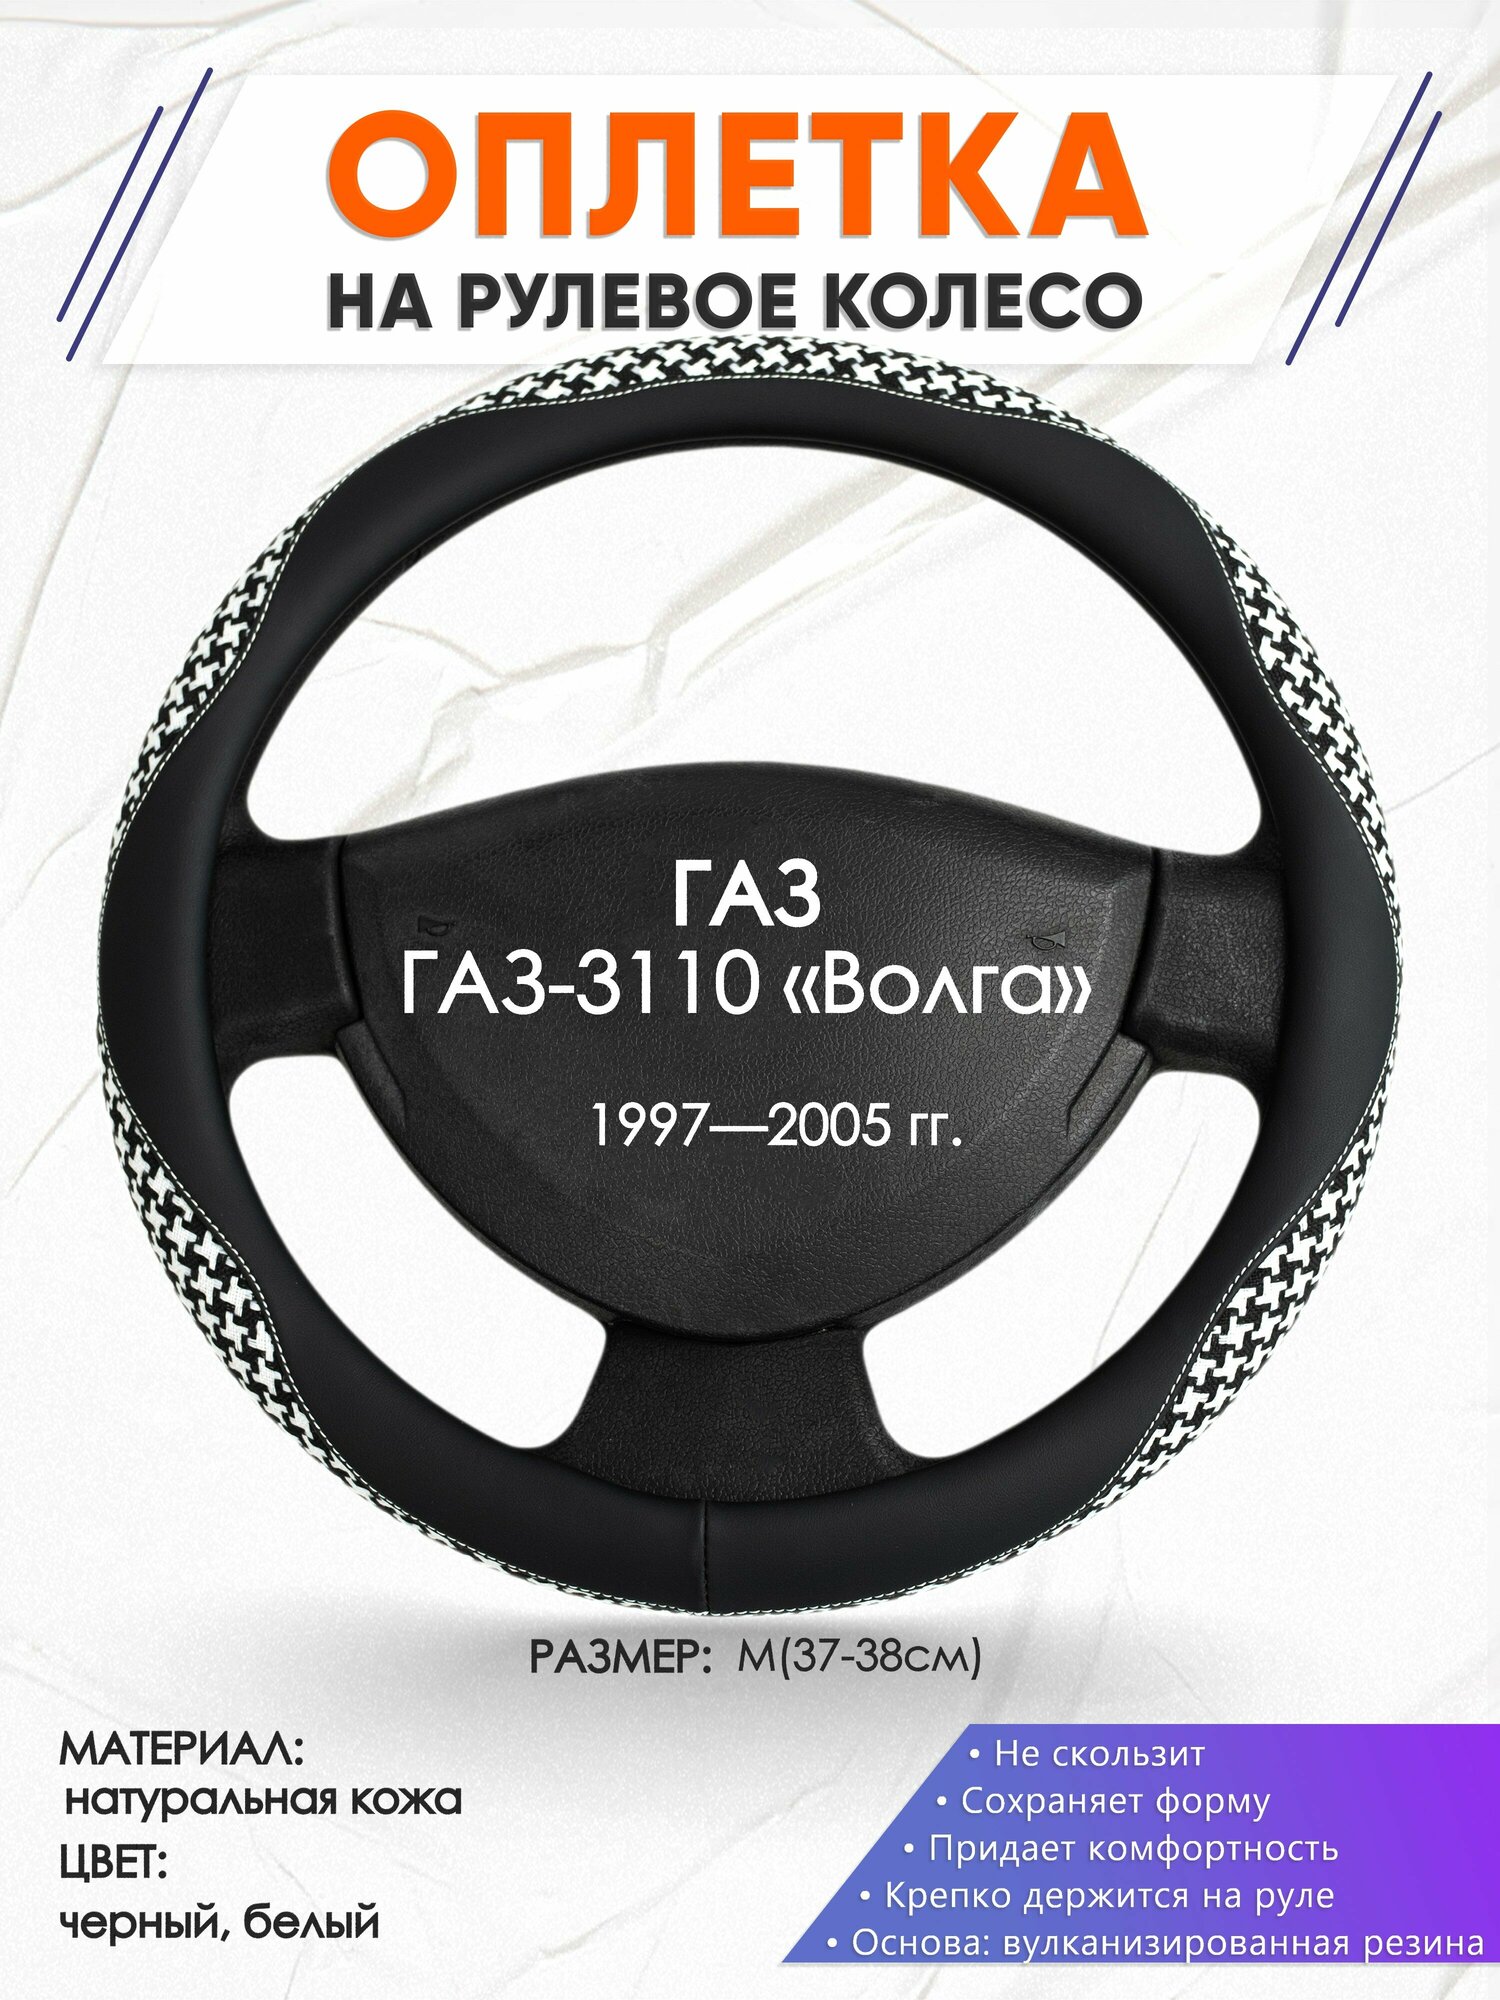 Оплетка наруль для ГАЗ ГАЗ-3110 «Волга»(ГАЗ ГАЗ-3110 «Волга») 1997 — 2005 годов выпуска, размер M(37-38см), Натуральная кожа 21